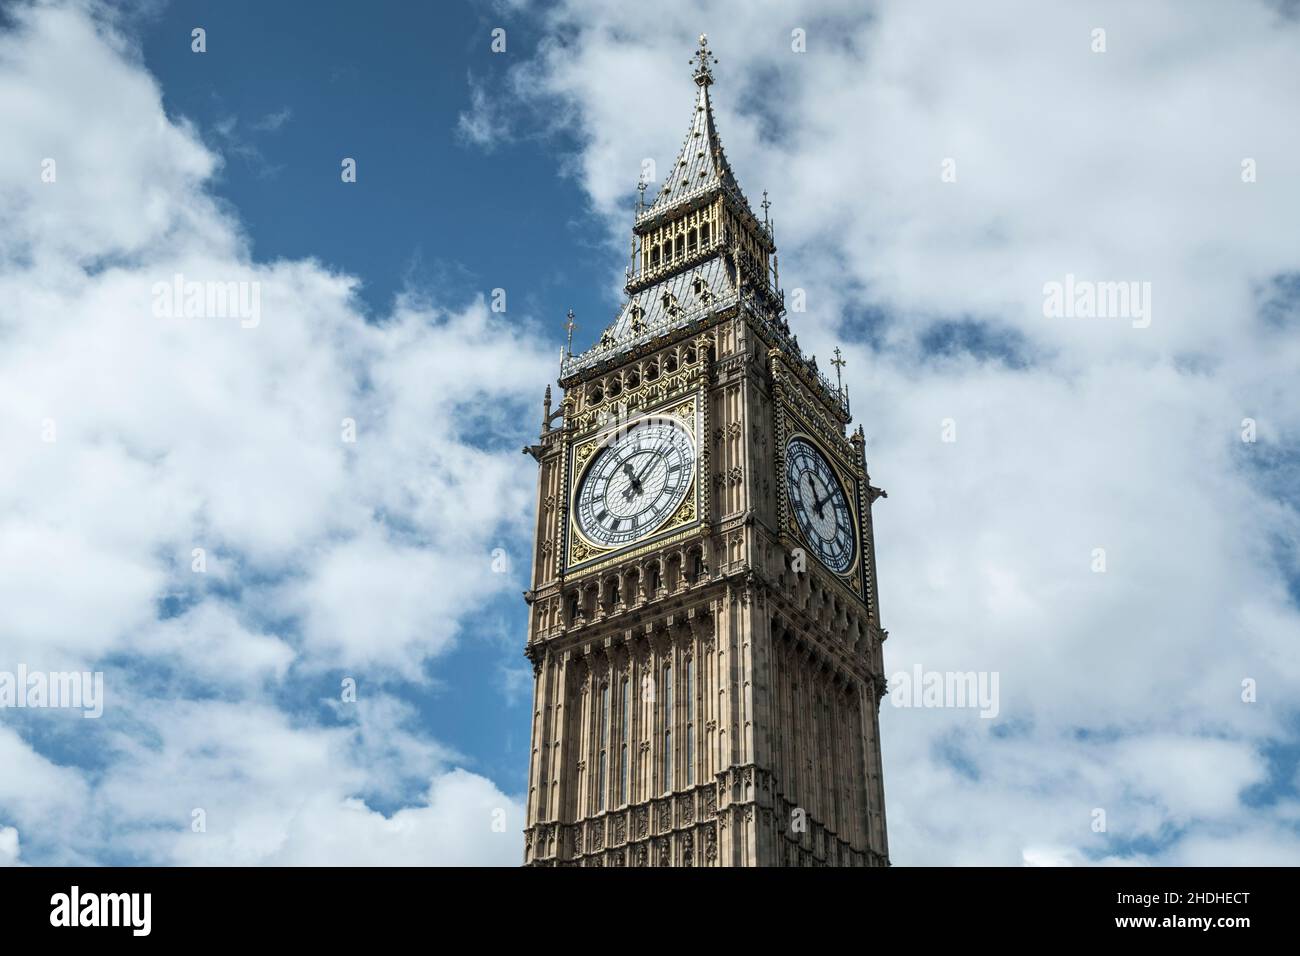 london, elizabeth tower, londons, big bens, clock tower, clock-tower, clocktow, the clock tower Stock Photo